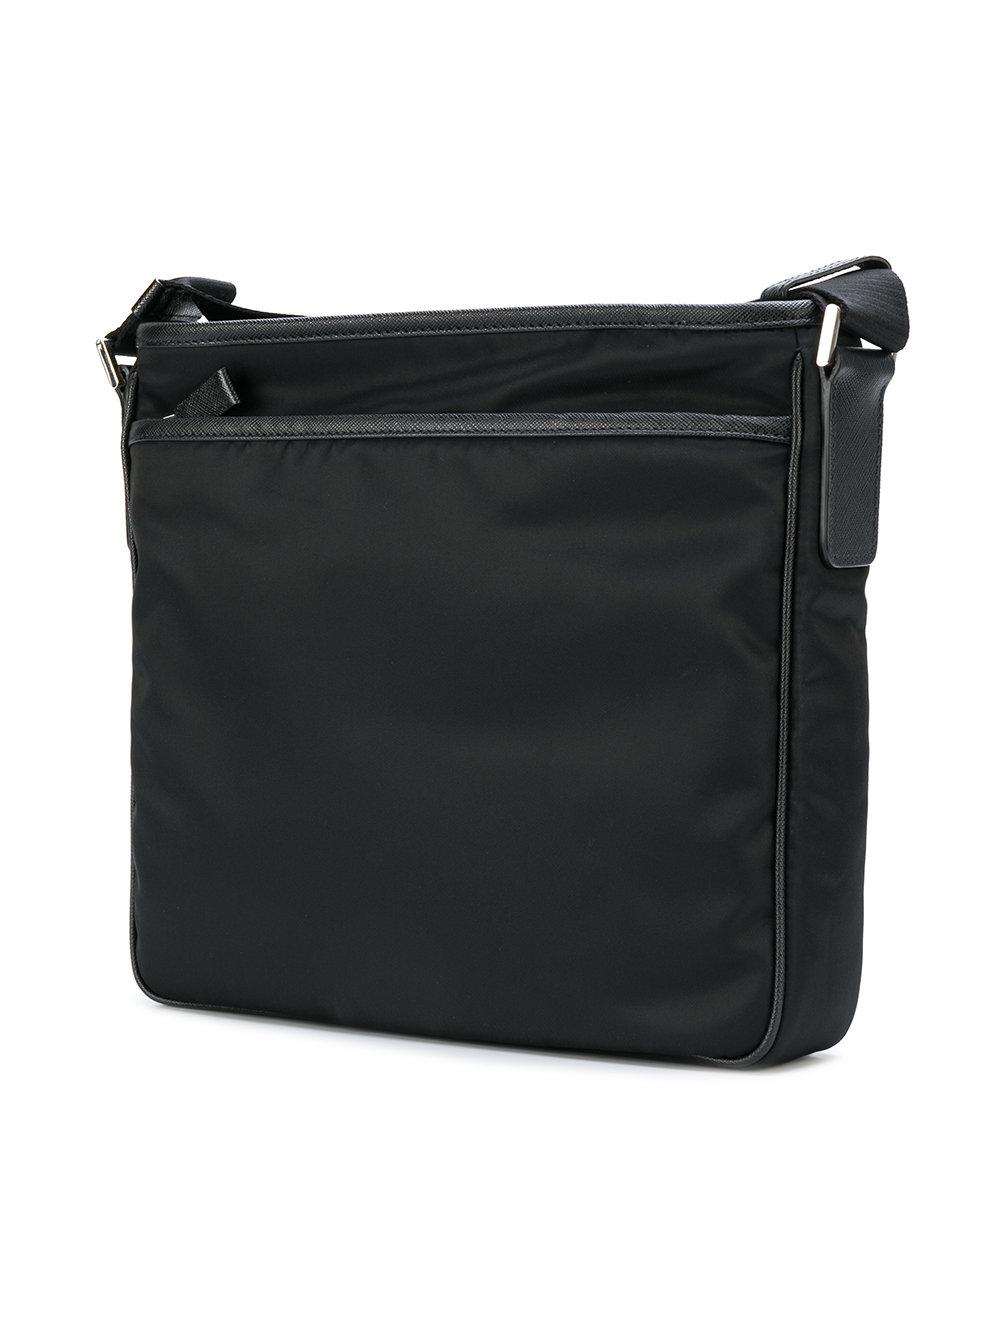 Prada Nylon Shoulder Bag in Black for Men - Lyst